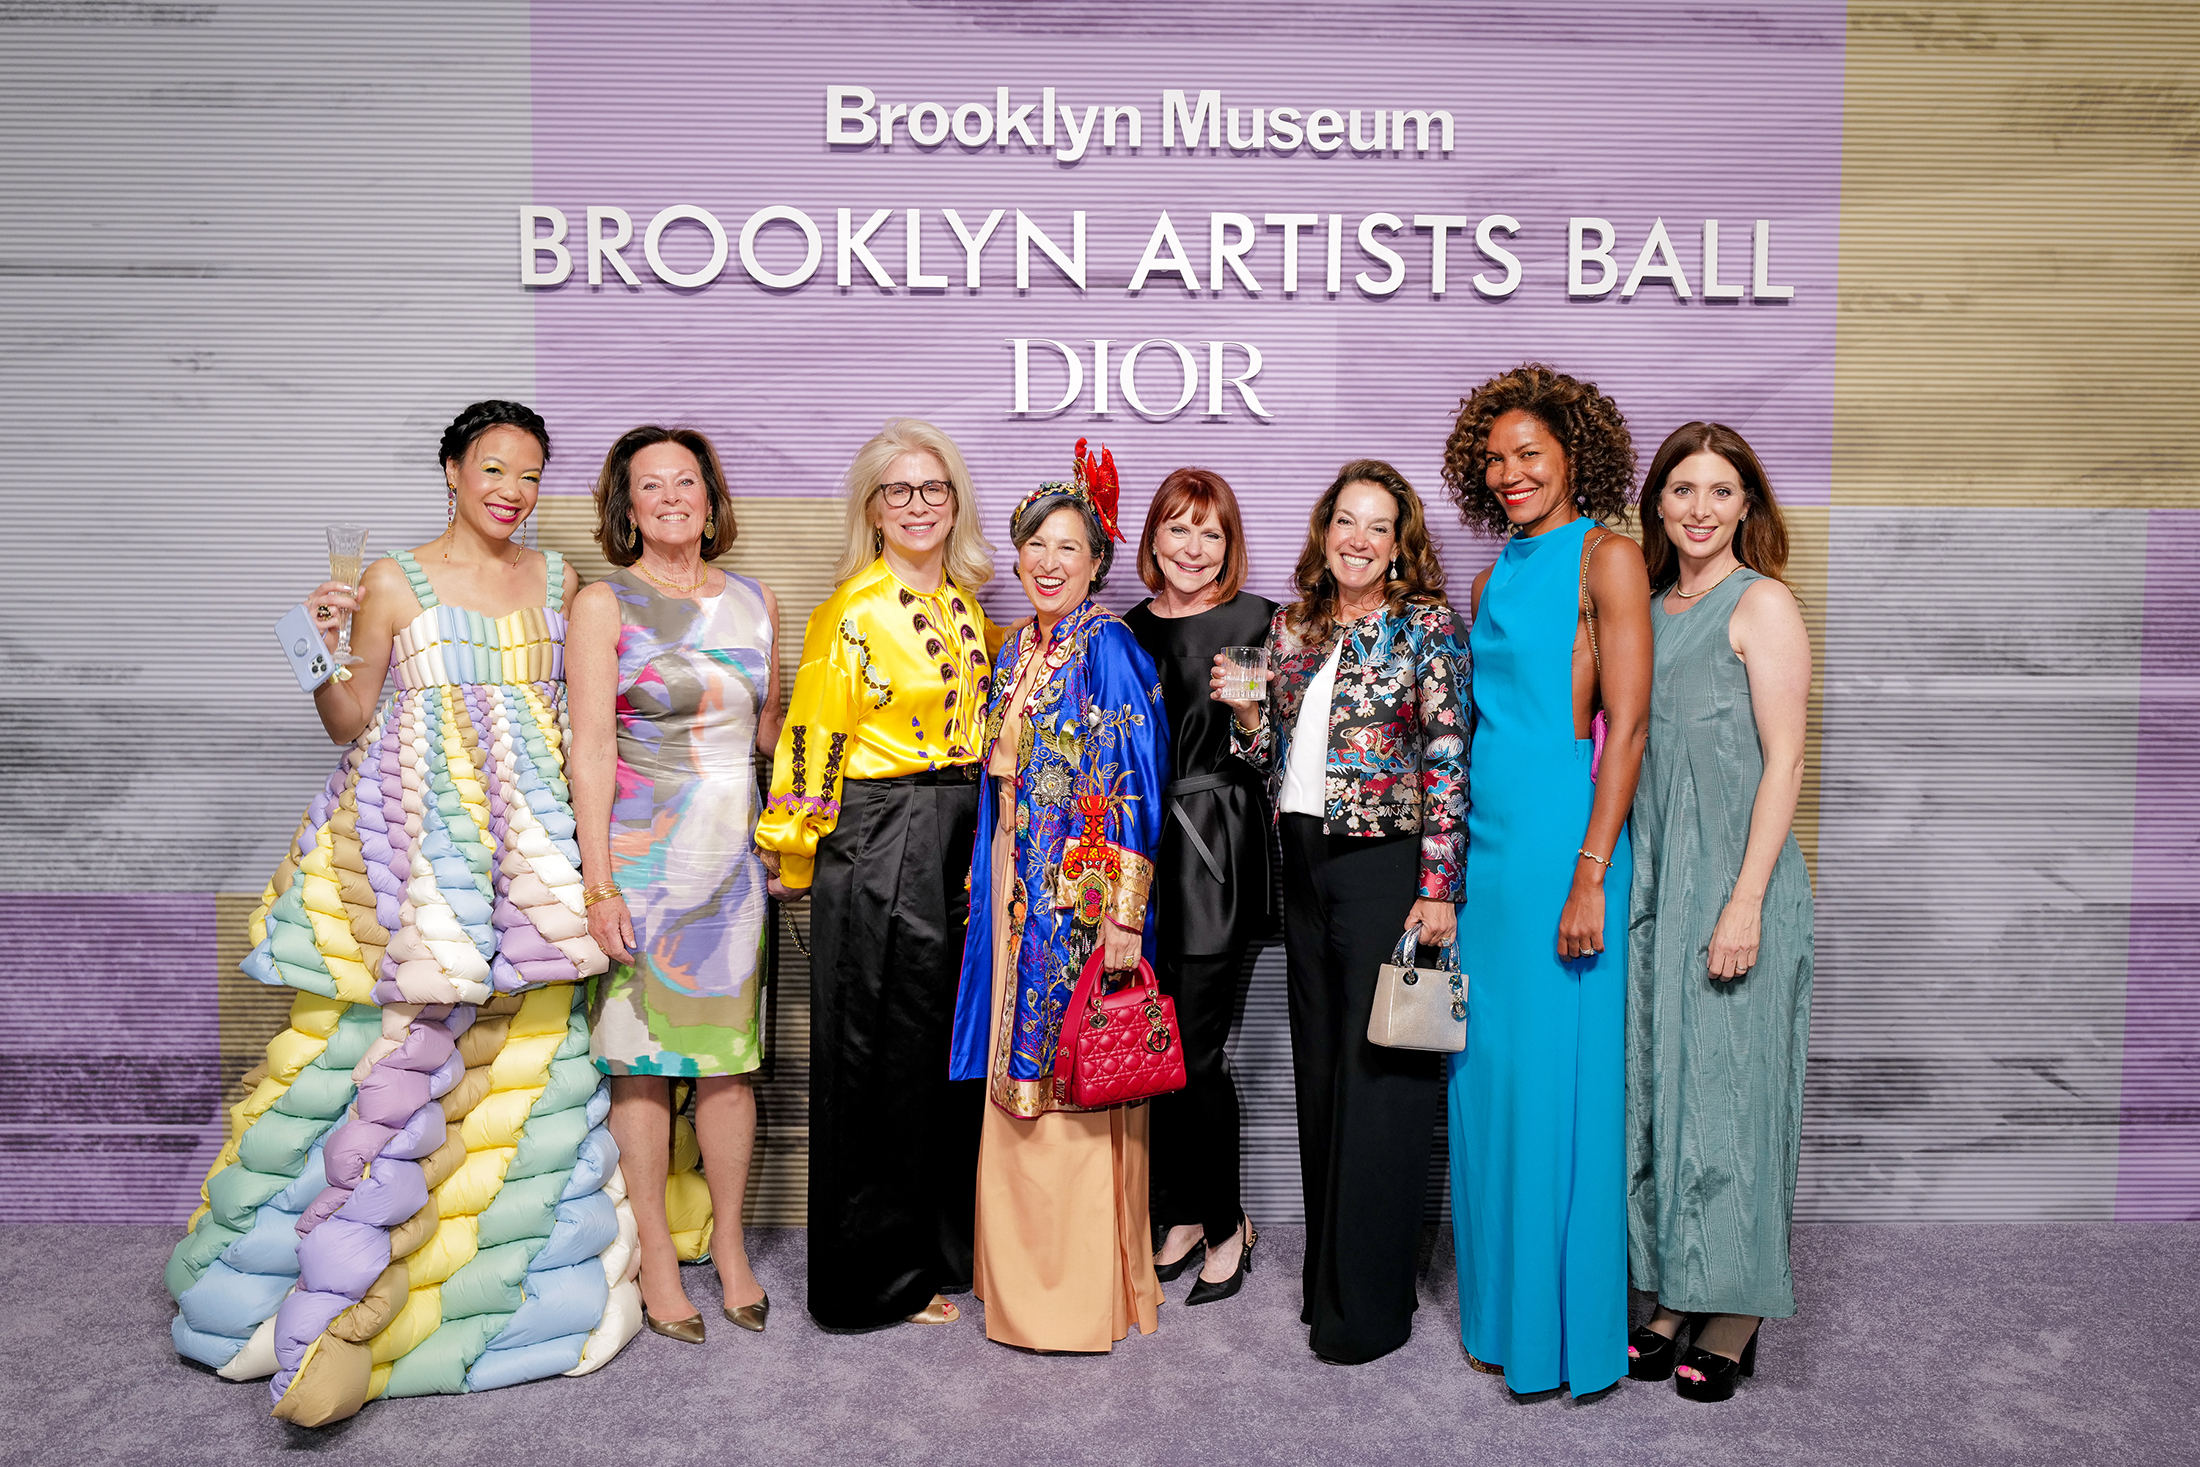 Dior Presents 2023 Brooklyn Artists Ball